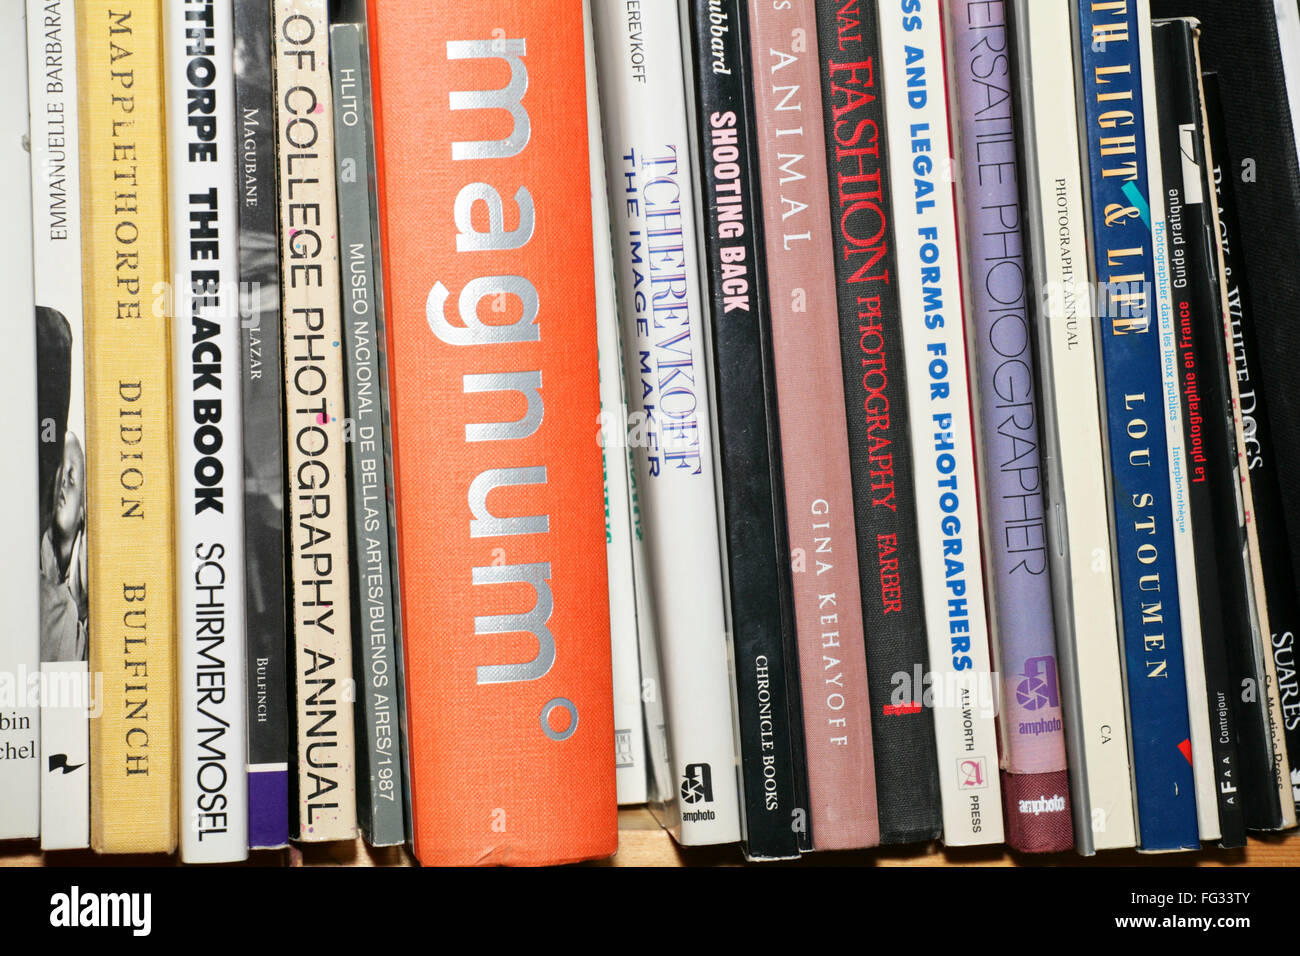 Art books arranged  on a bookshelf Stock Photo